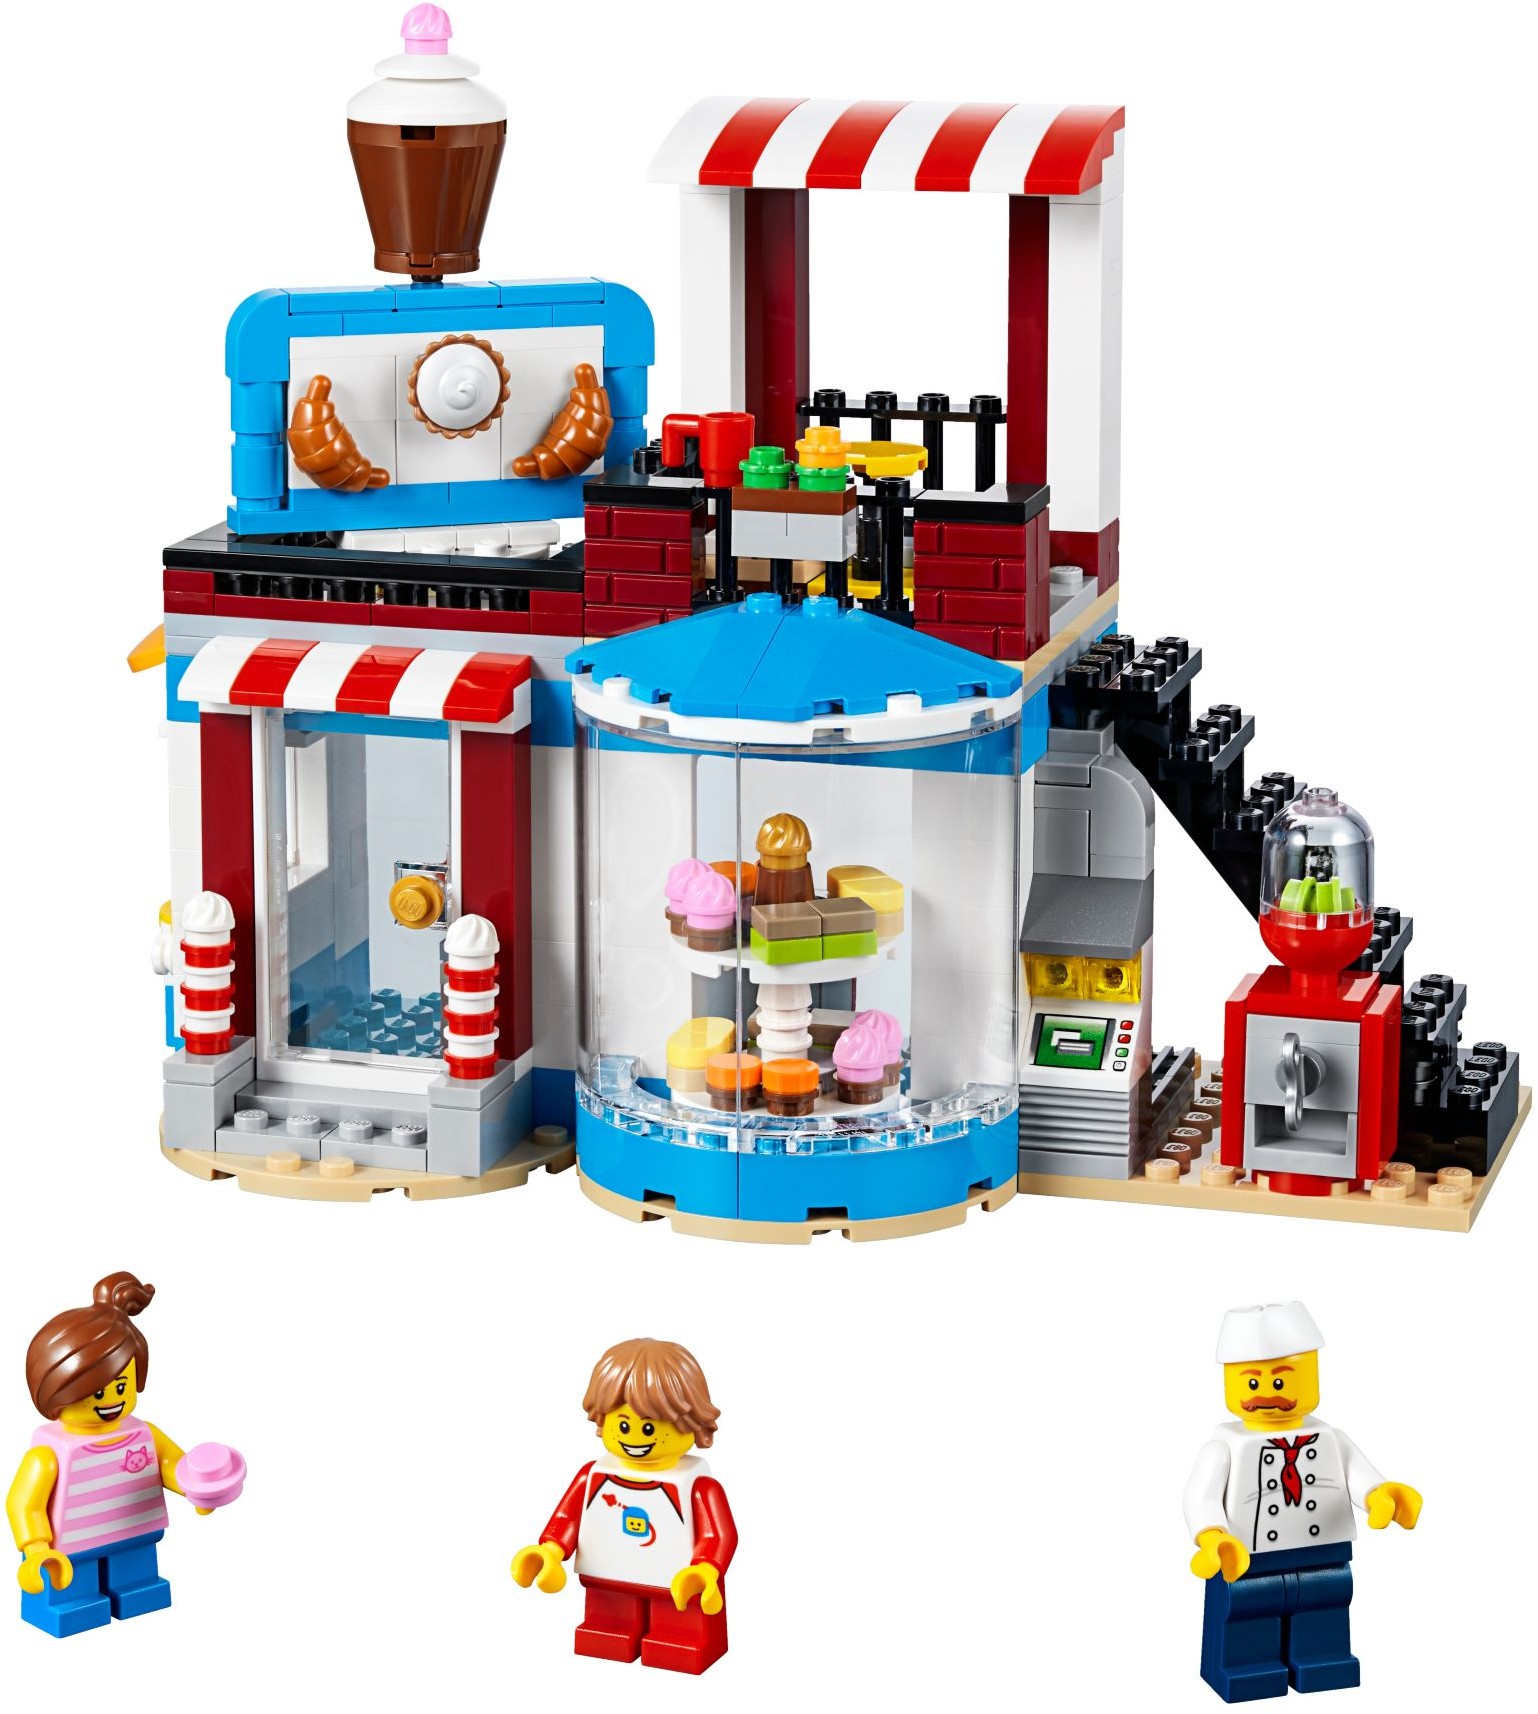 kan opfattes svinge svinge LEGO Creator 2018 | Brickset